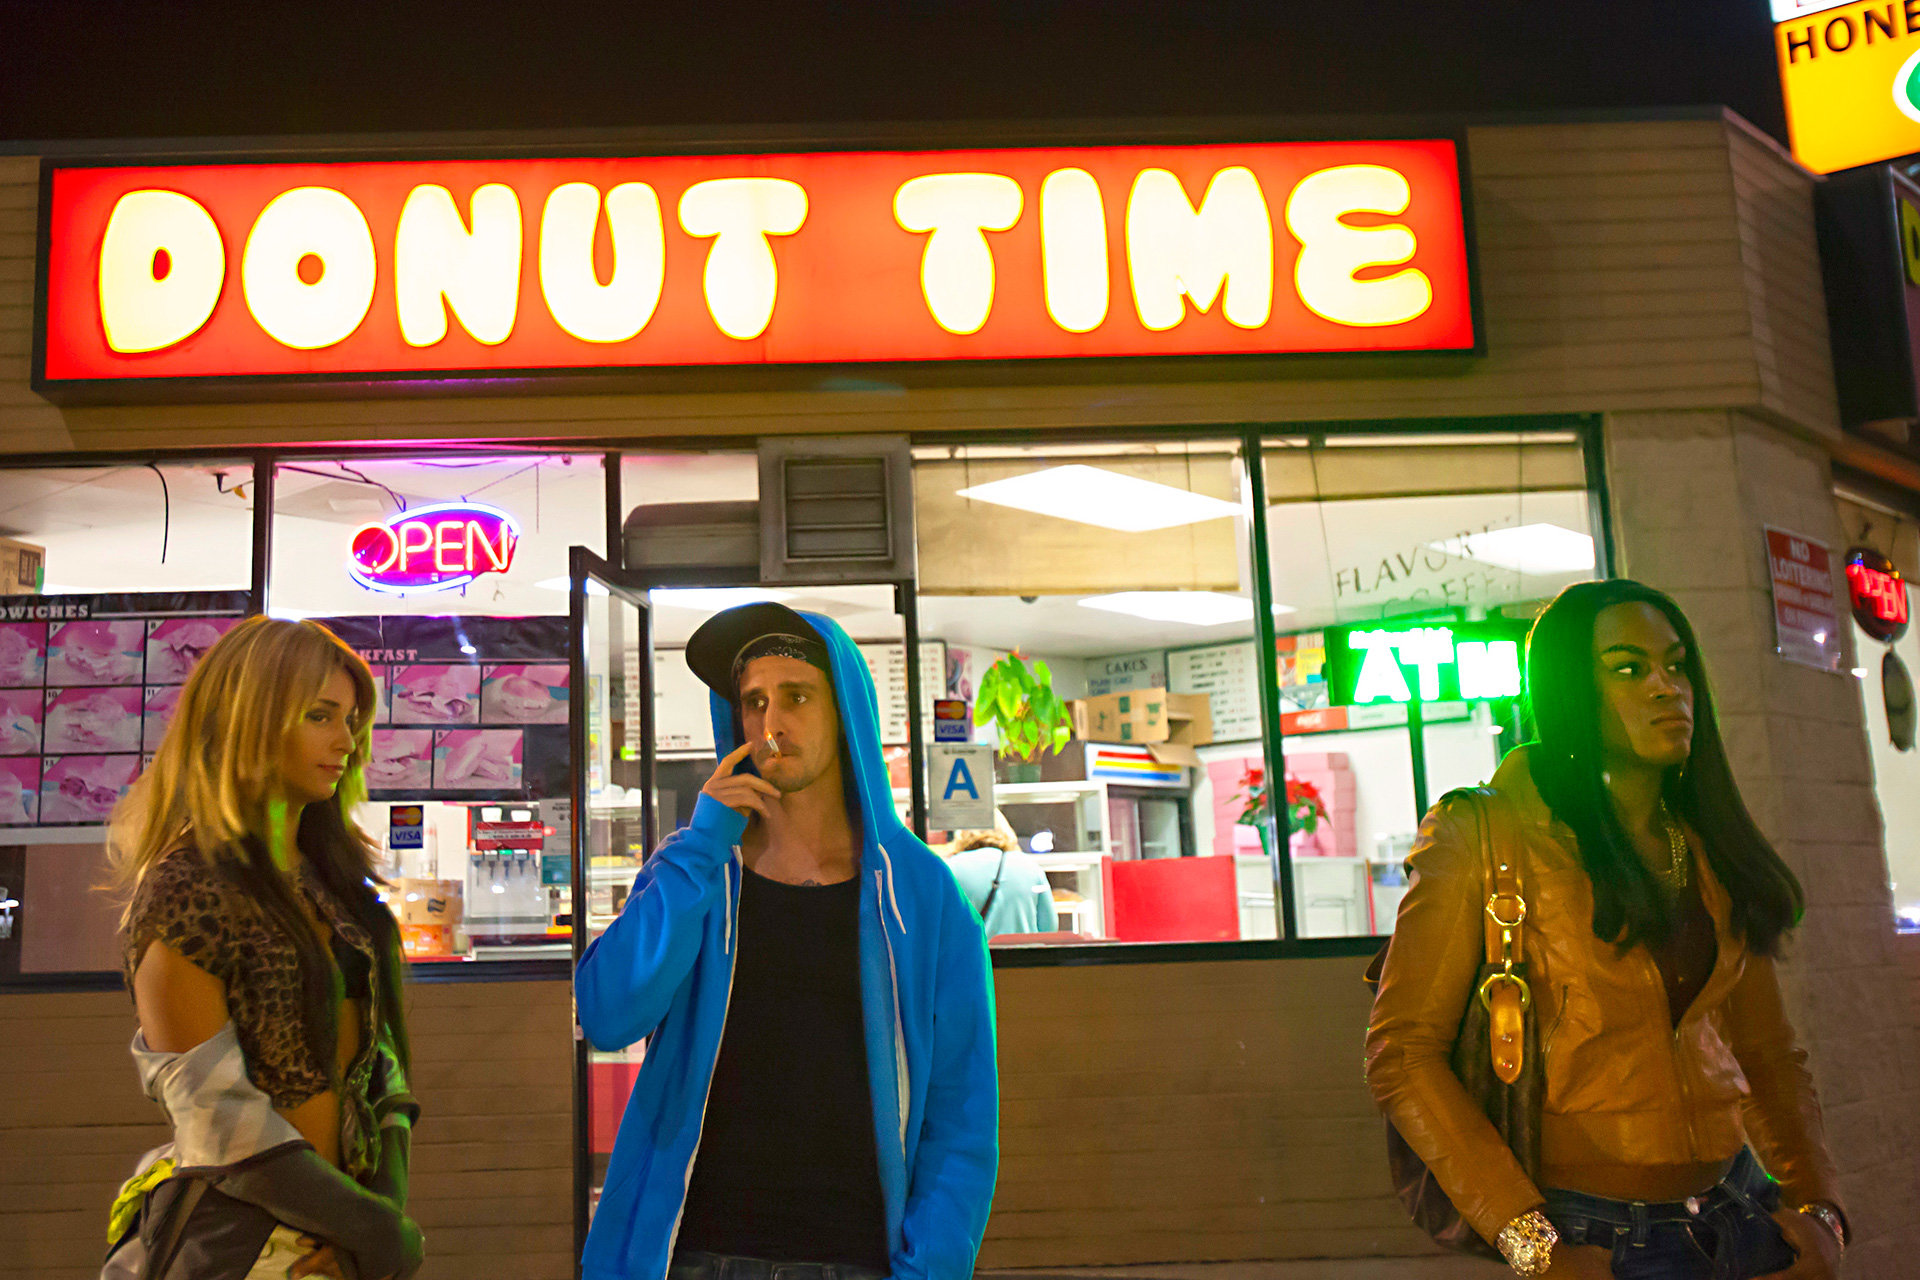 Kitana Kiki Rodriguez und Mya Taylor stehen vor dem Donut Shop